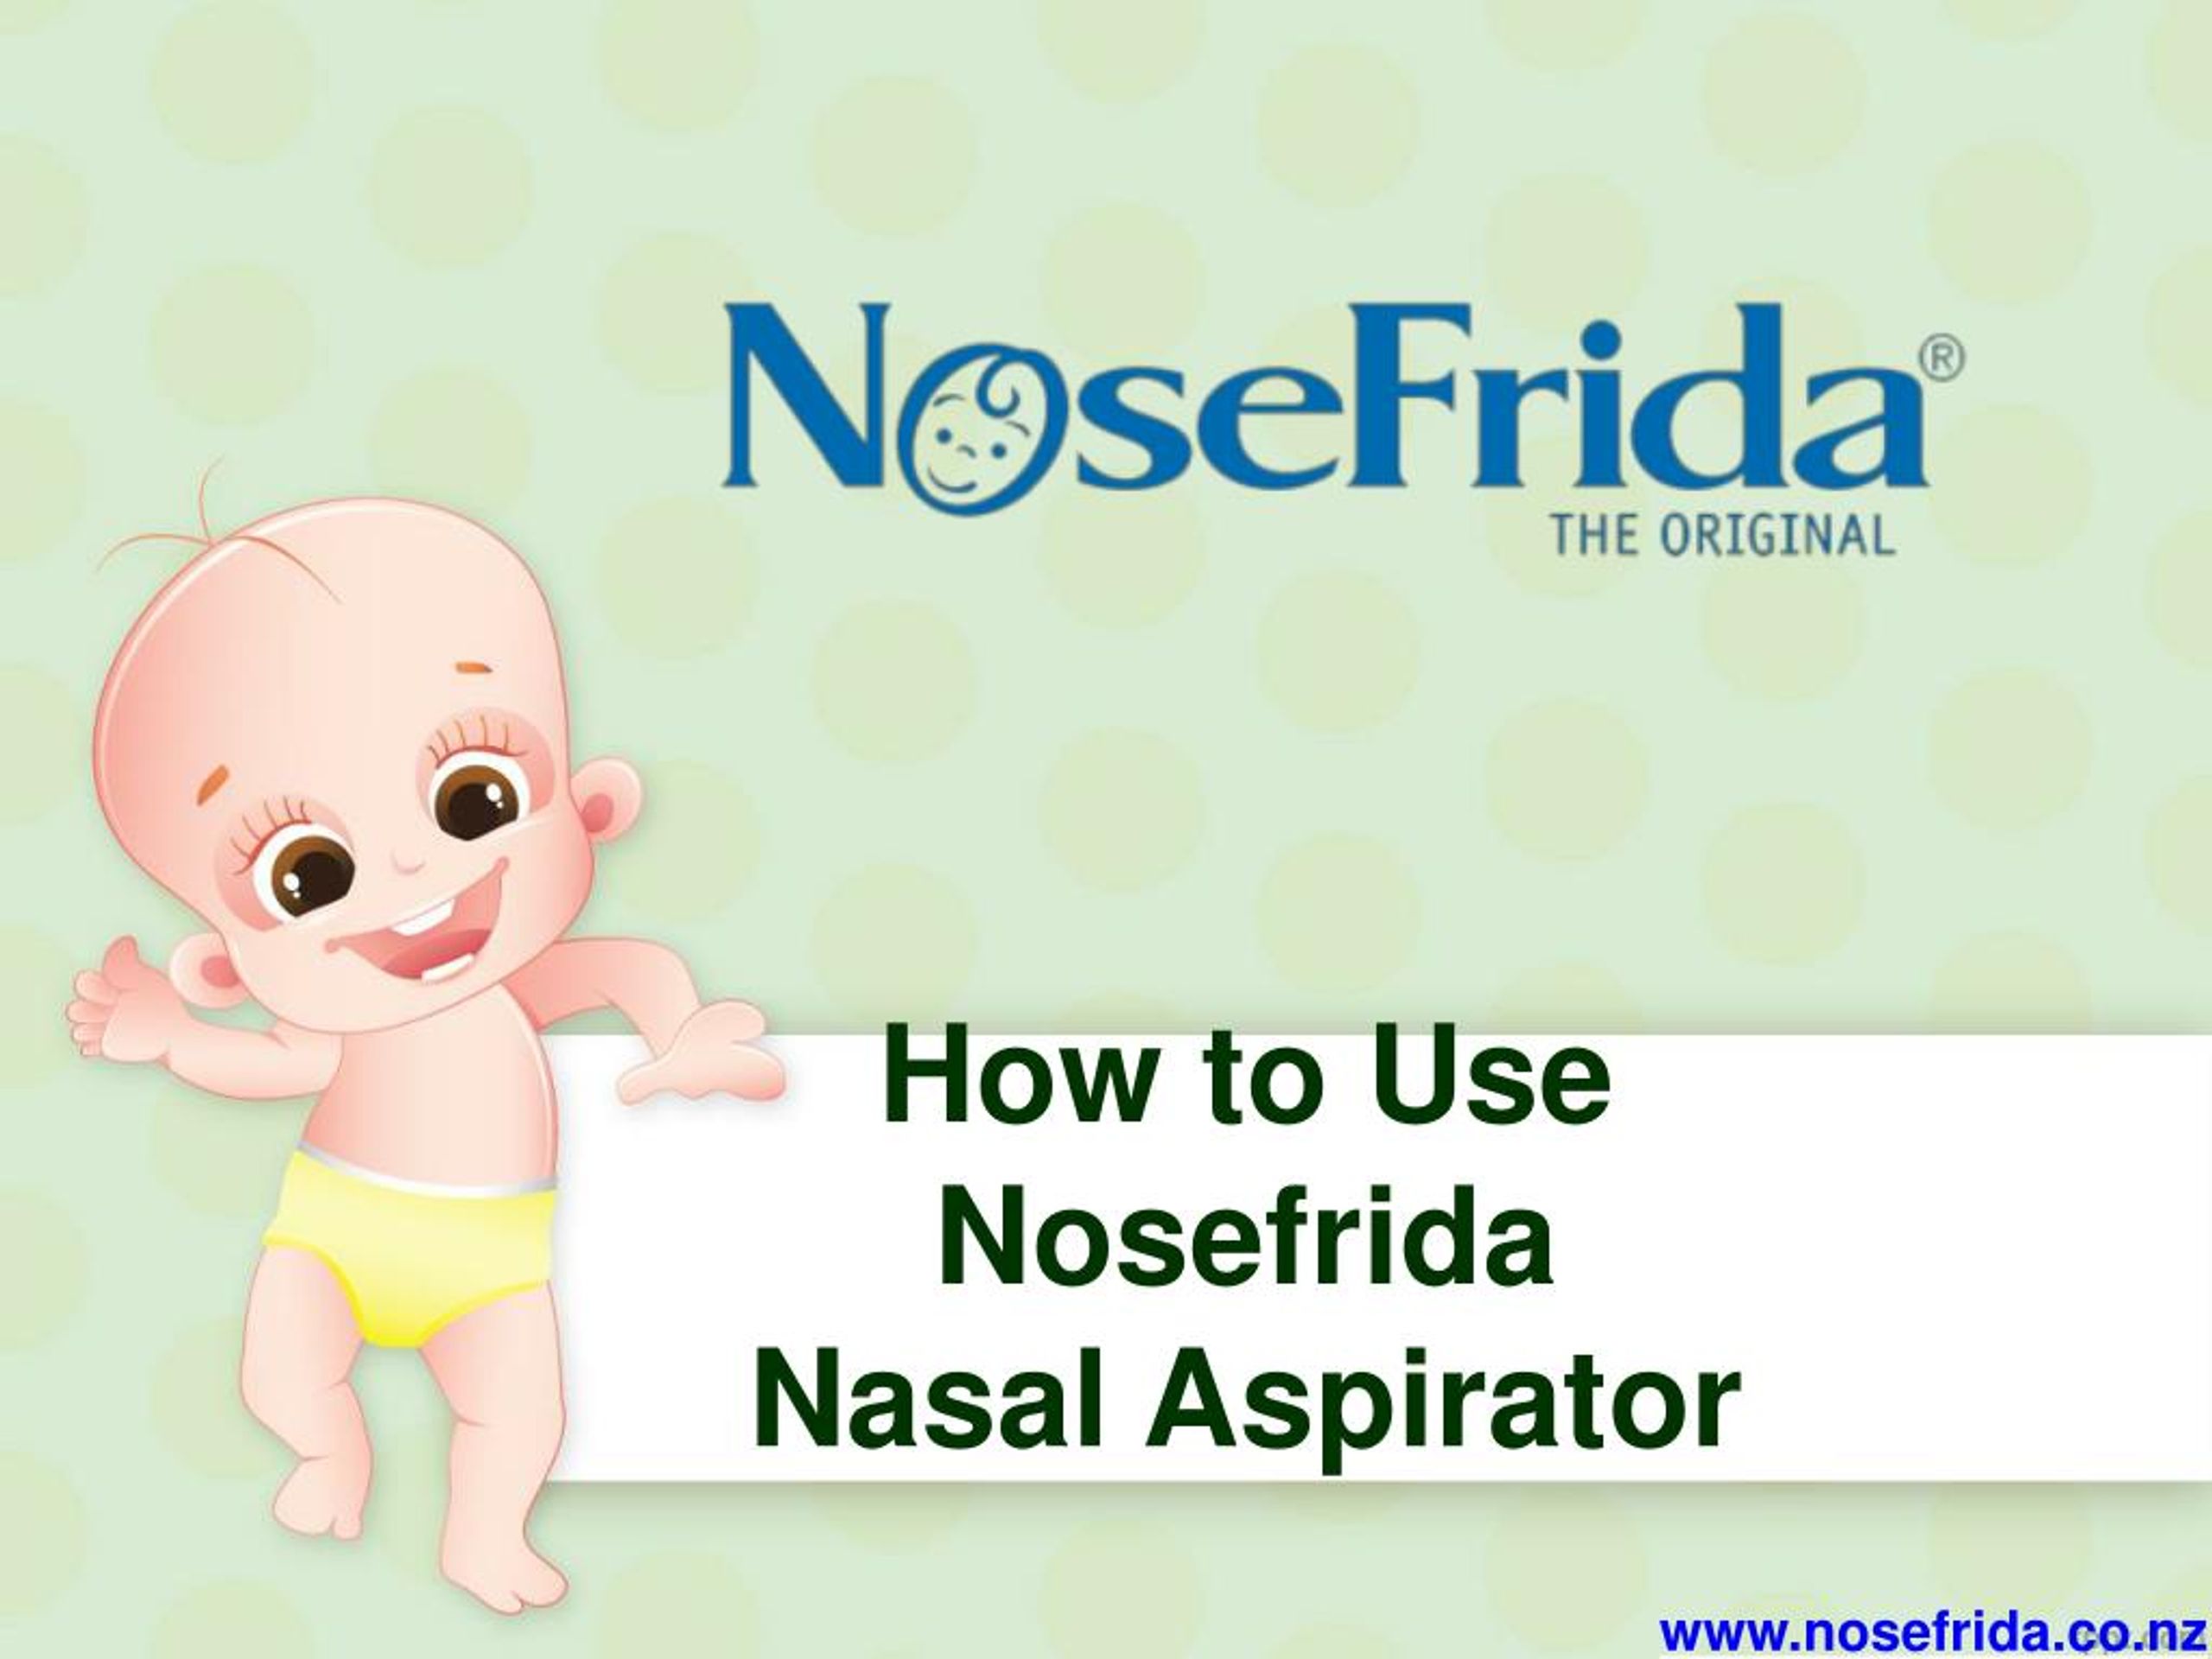 https://image4.slideserve.com/7585469/how-to-use-nosefrida-nasal-aspirator-l.jpg